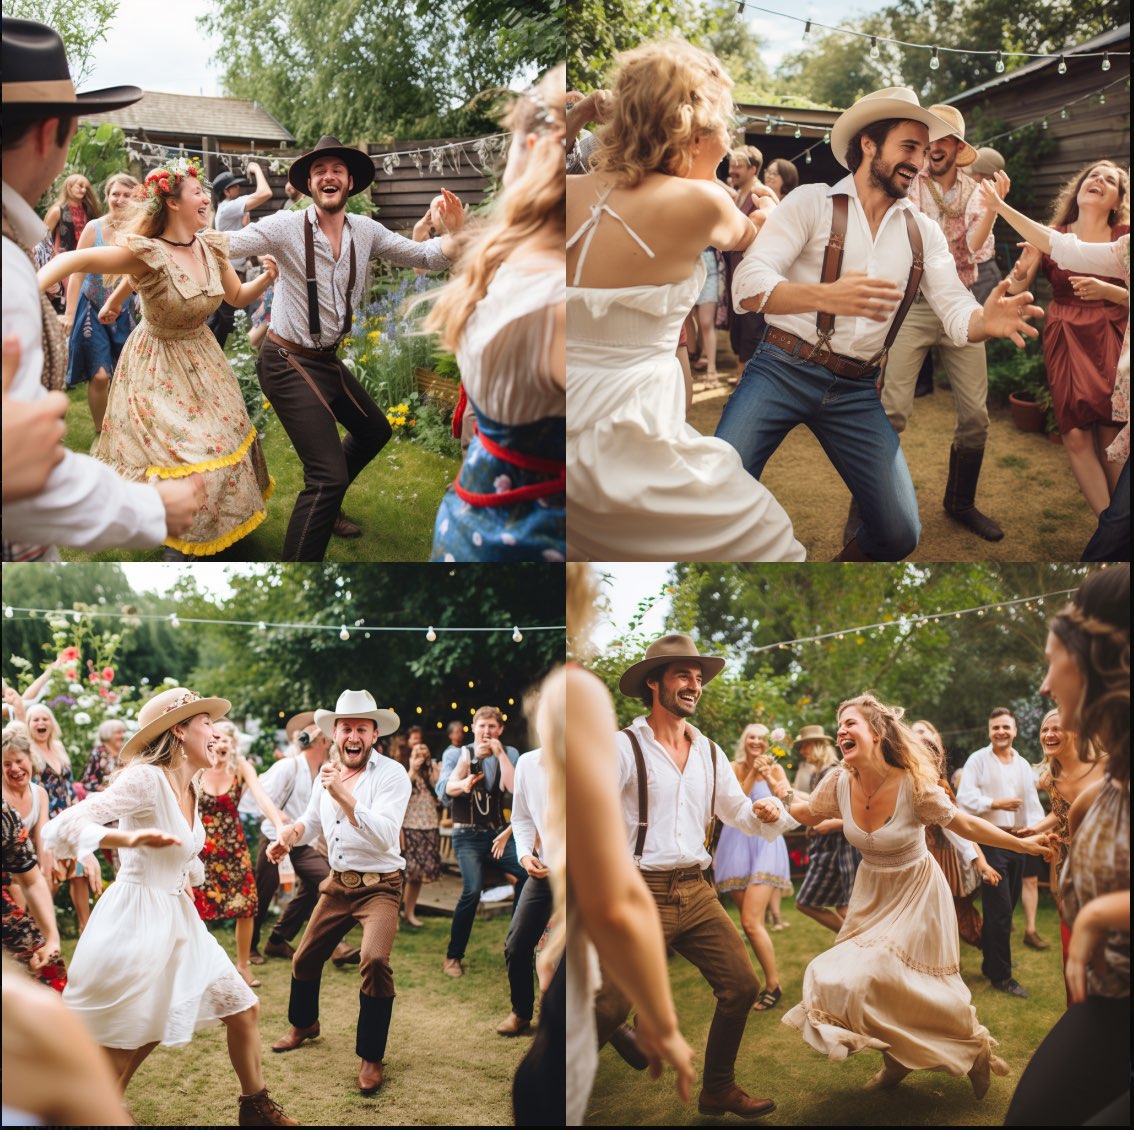 people dancing, suburban garden party, hardcore wild west theme. KI-Prompt Inspiration: Theme